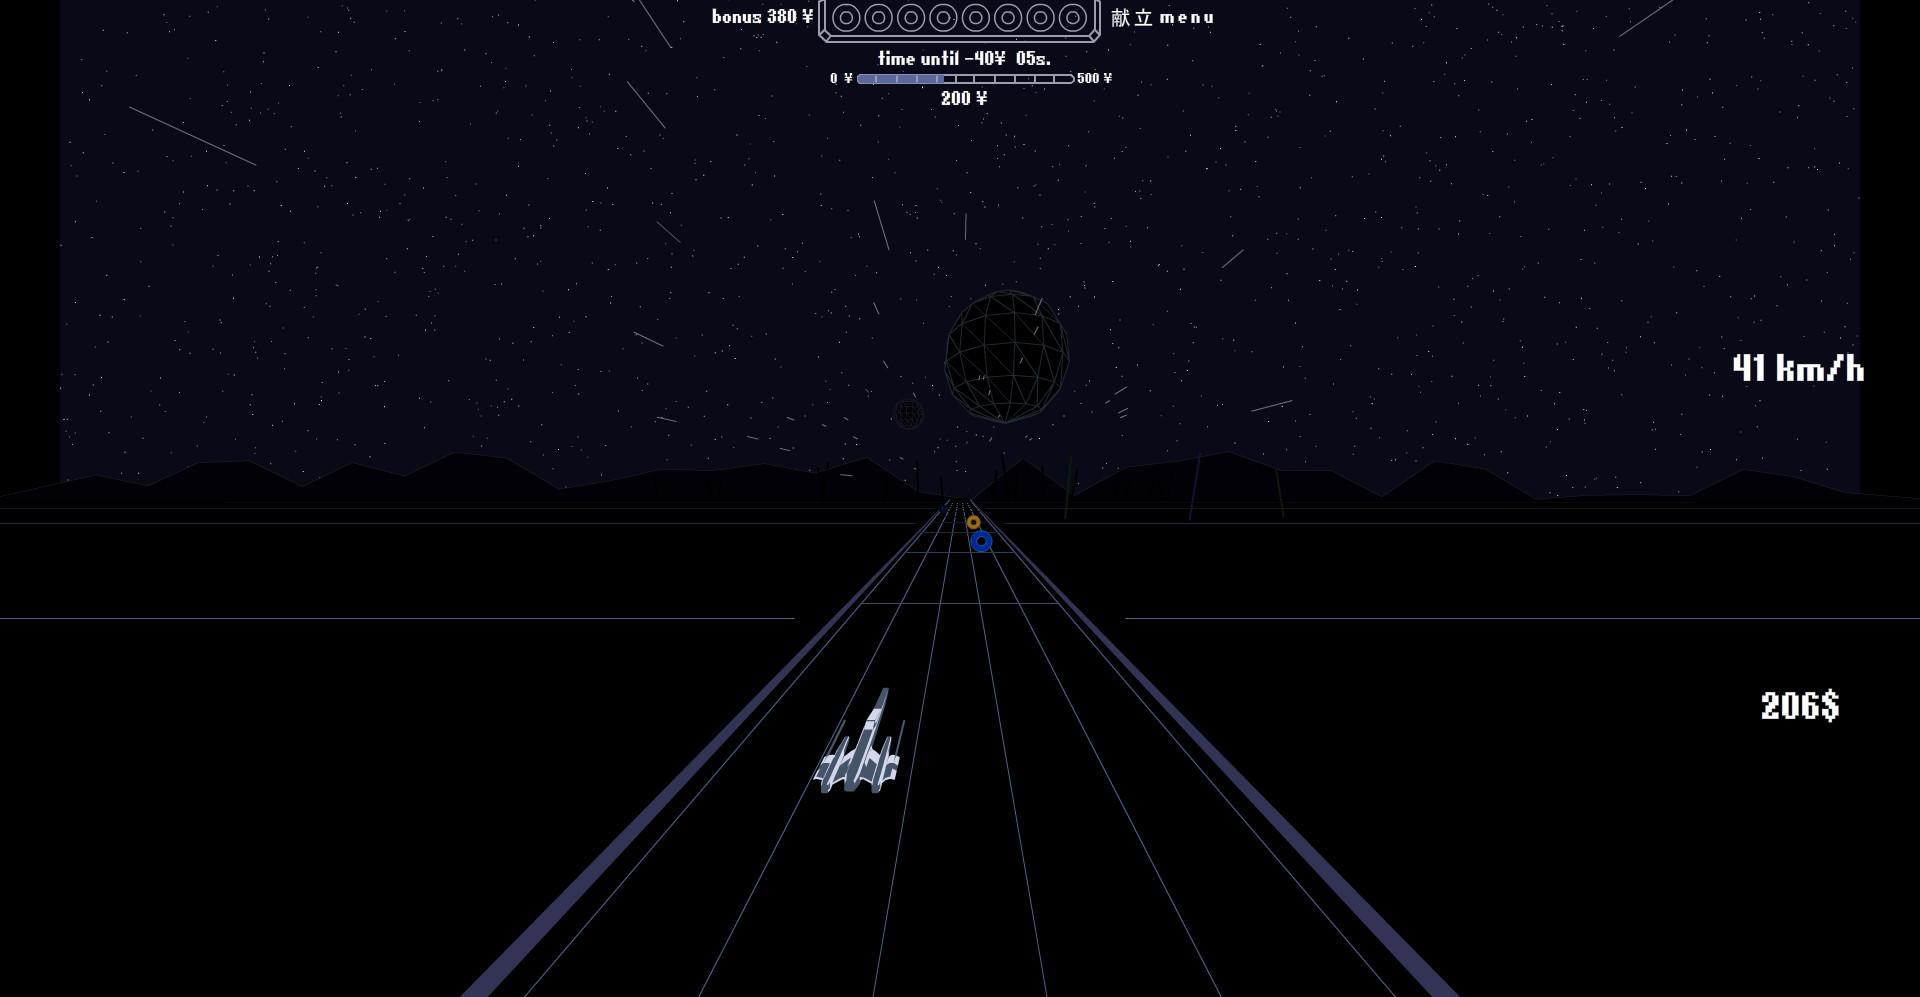 Screenshot №1 from game Star Fields